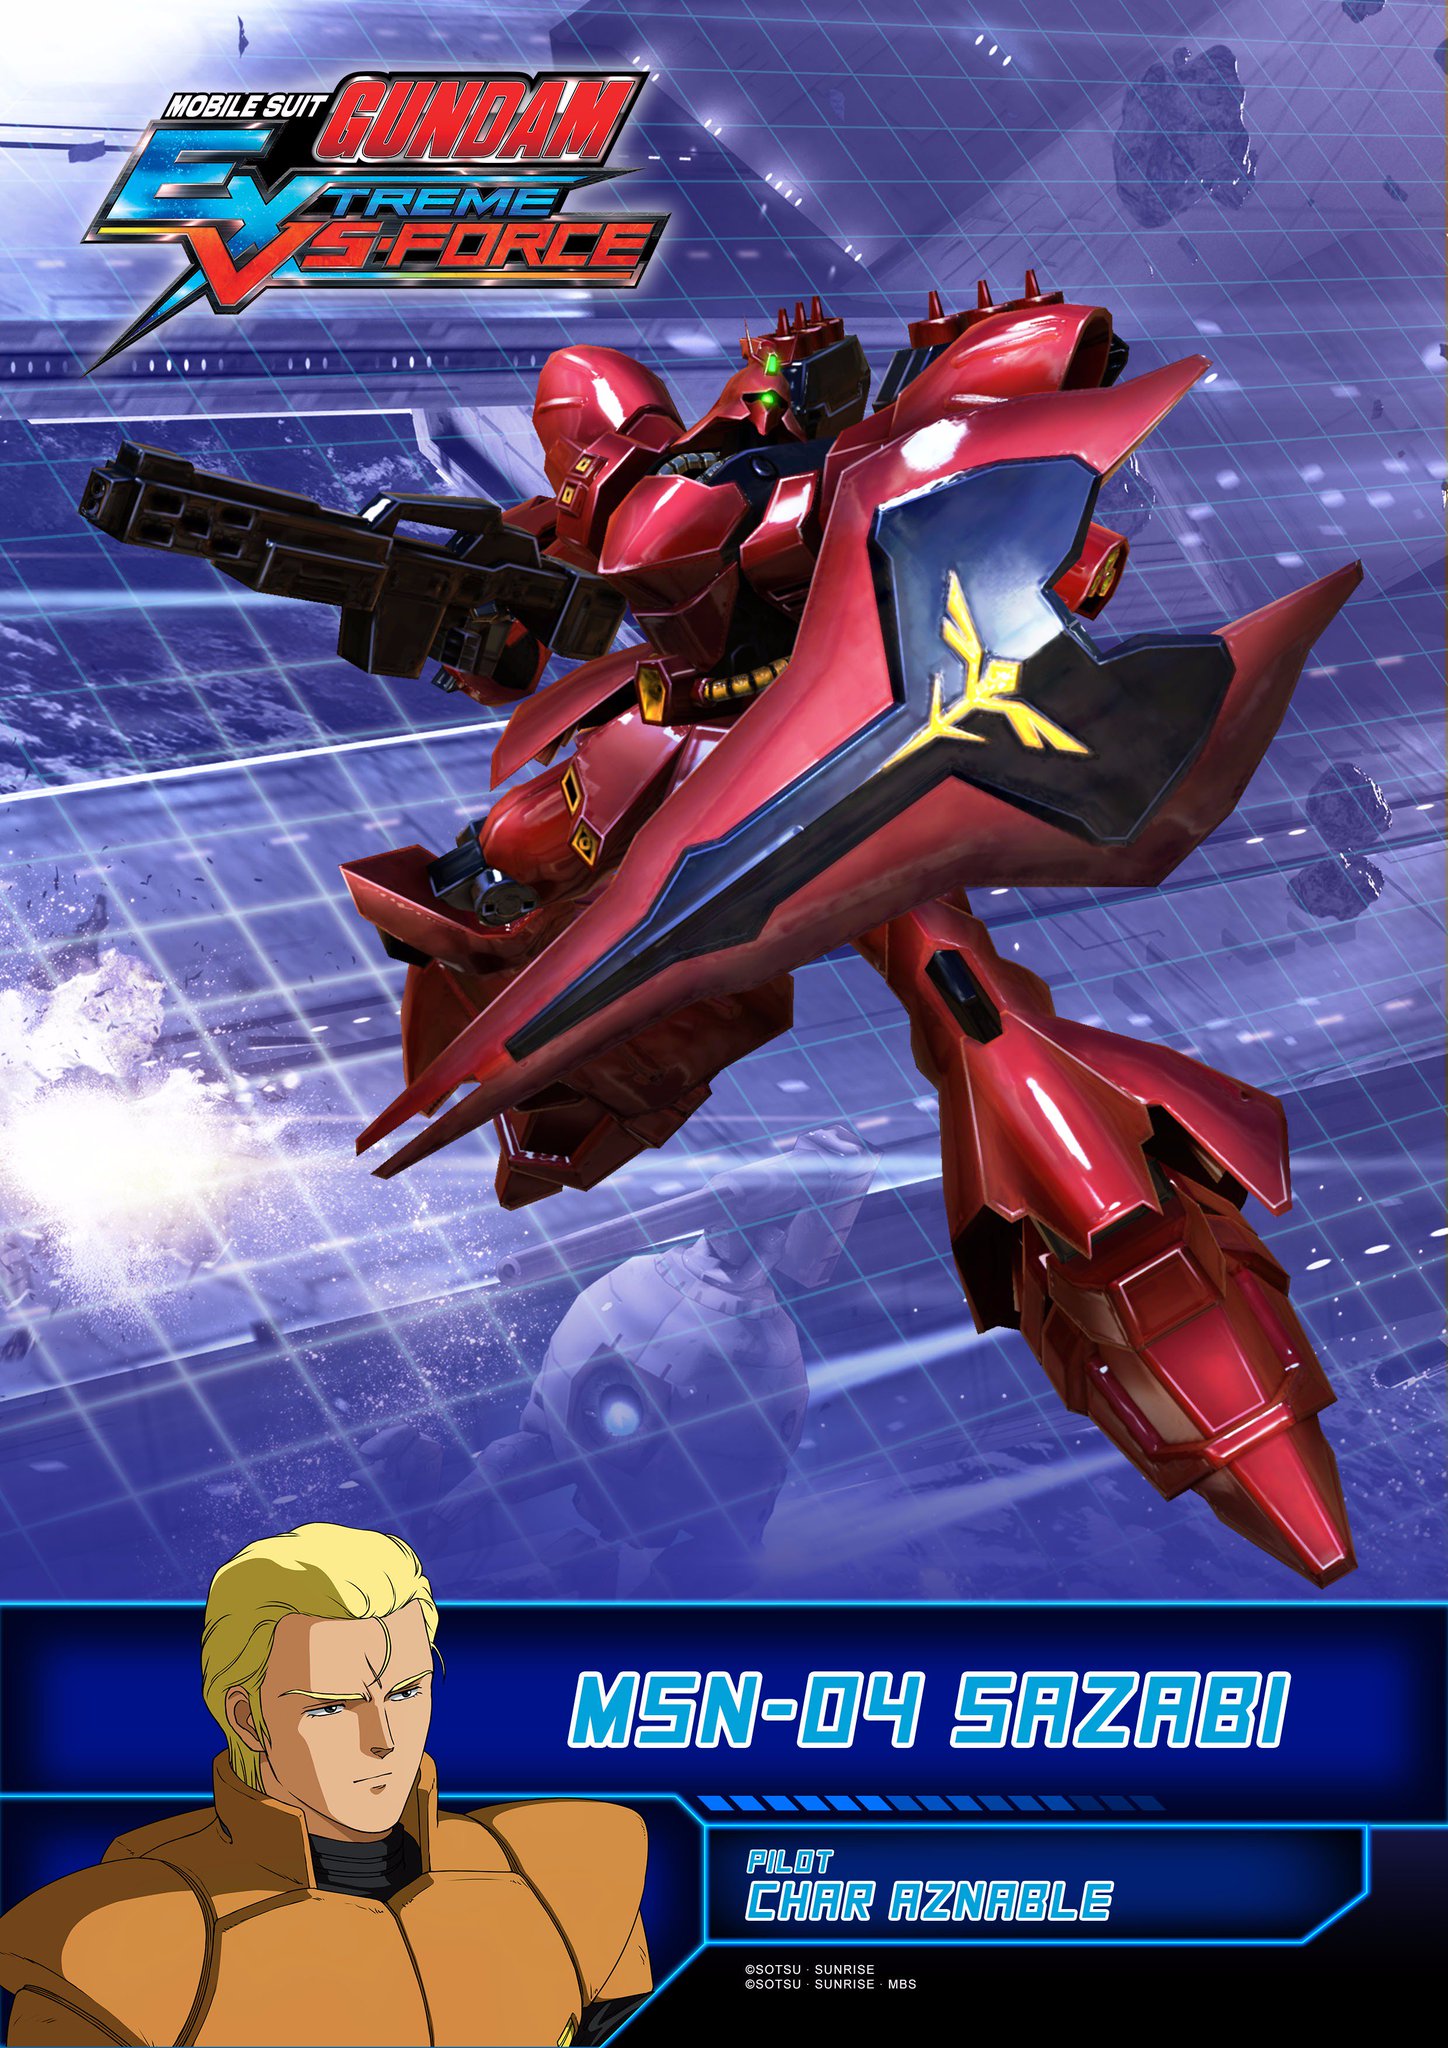 Bandai Namco Us On Twitter Sazabi Sinanju Vs Zeta Gundam Zz Who Wins Decide The Outcome In Msg Extreme Vs Force Https T Co Xhtvuglwgr